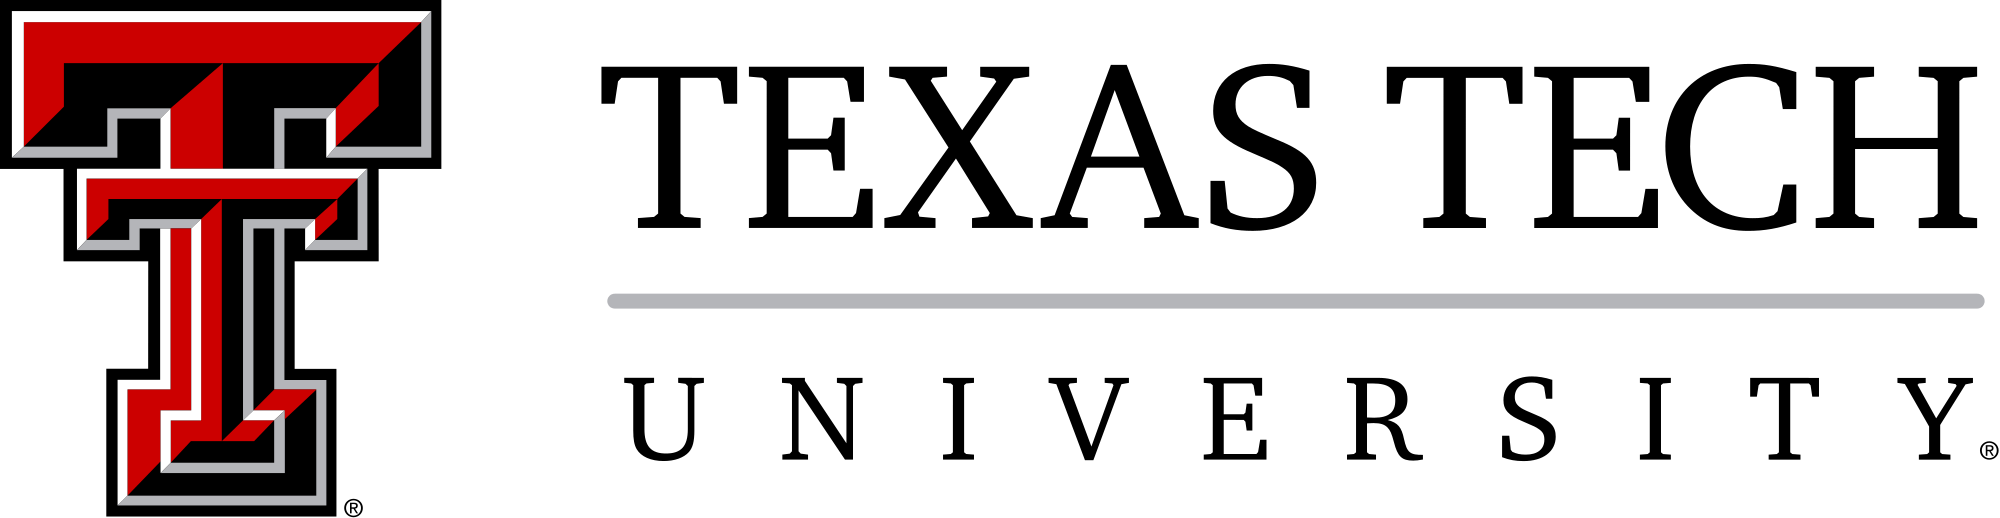 Texas Tech University Logo - Texas Tech University logo.svg